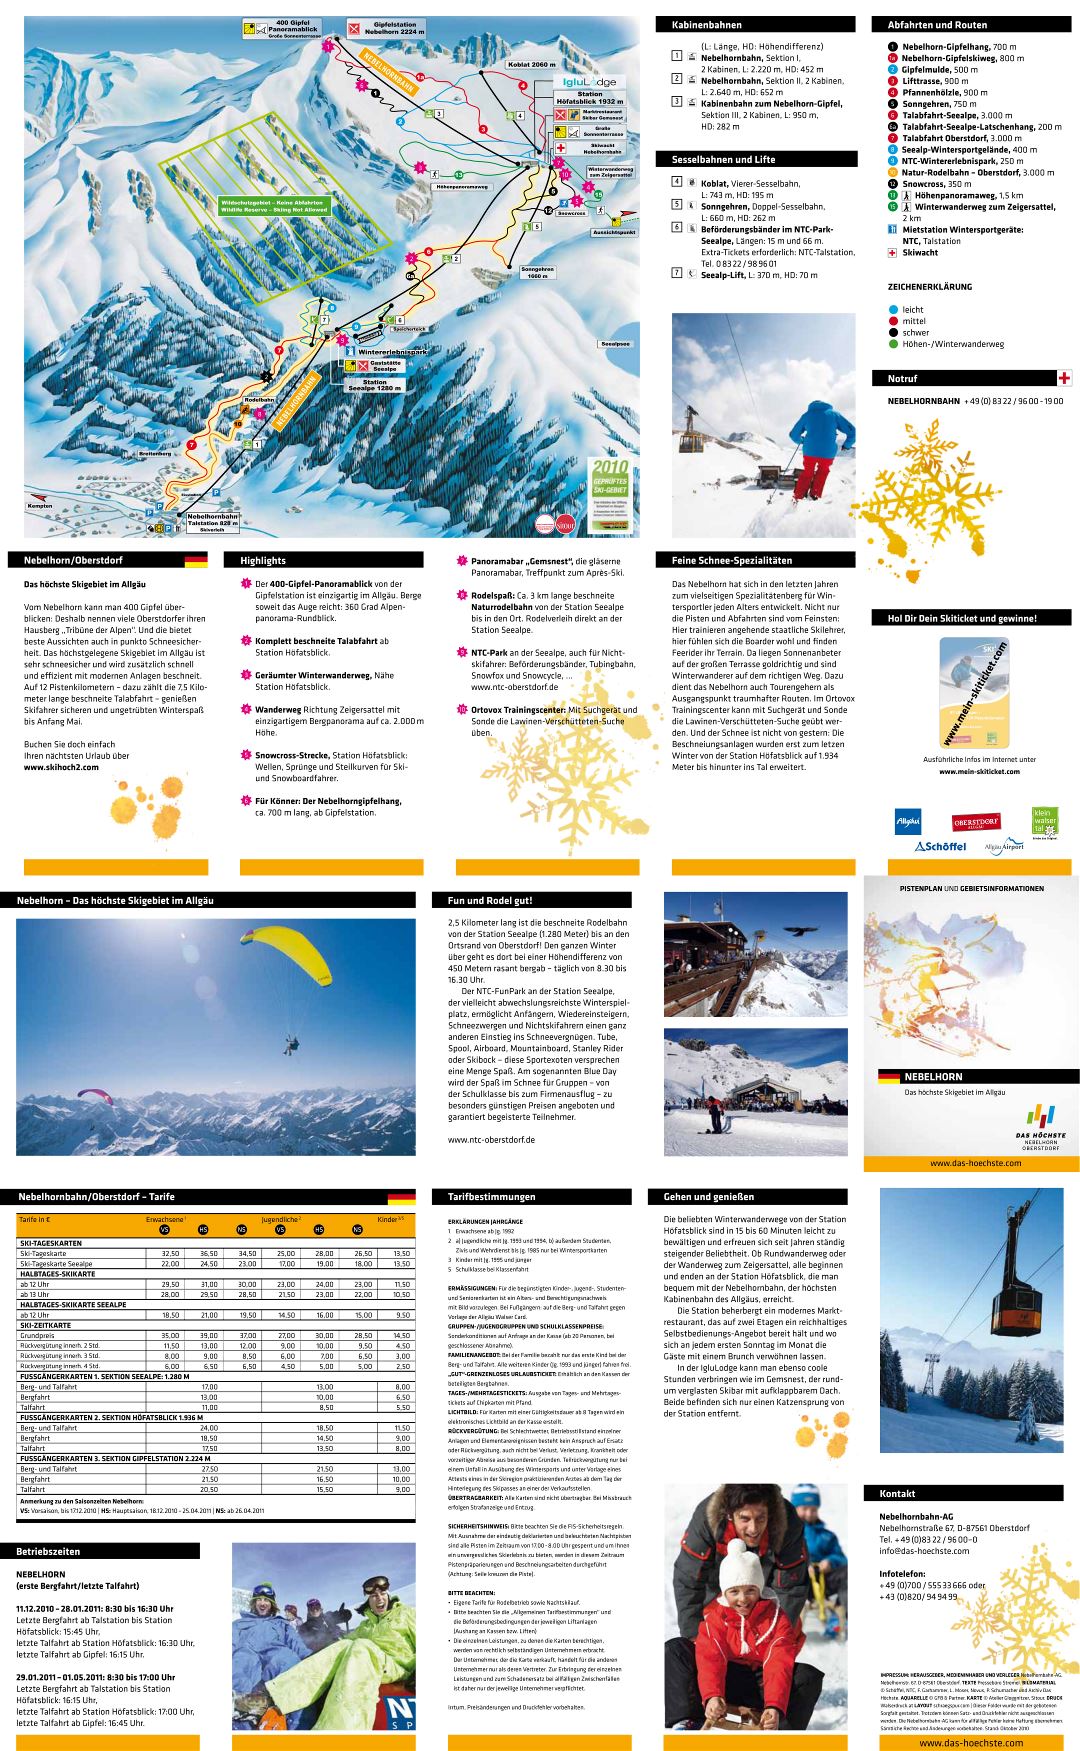 Large scale piste map and guide of Nebelhorn, Kleinwalsertal - Oberstdorf Ski Resort - 2010